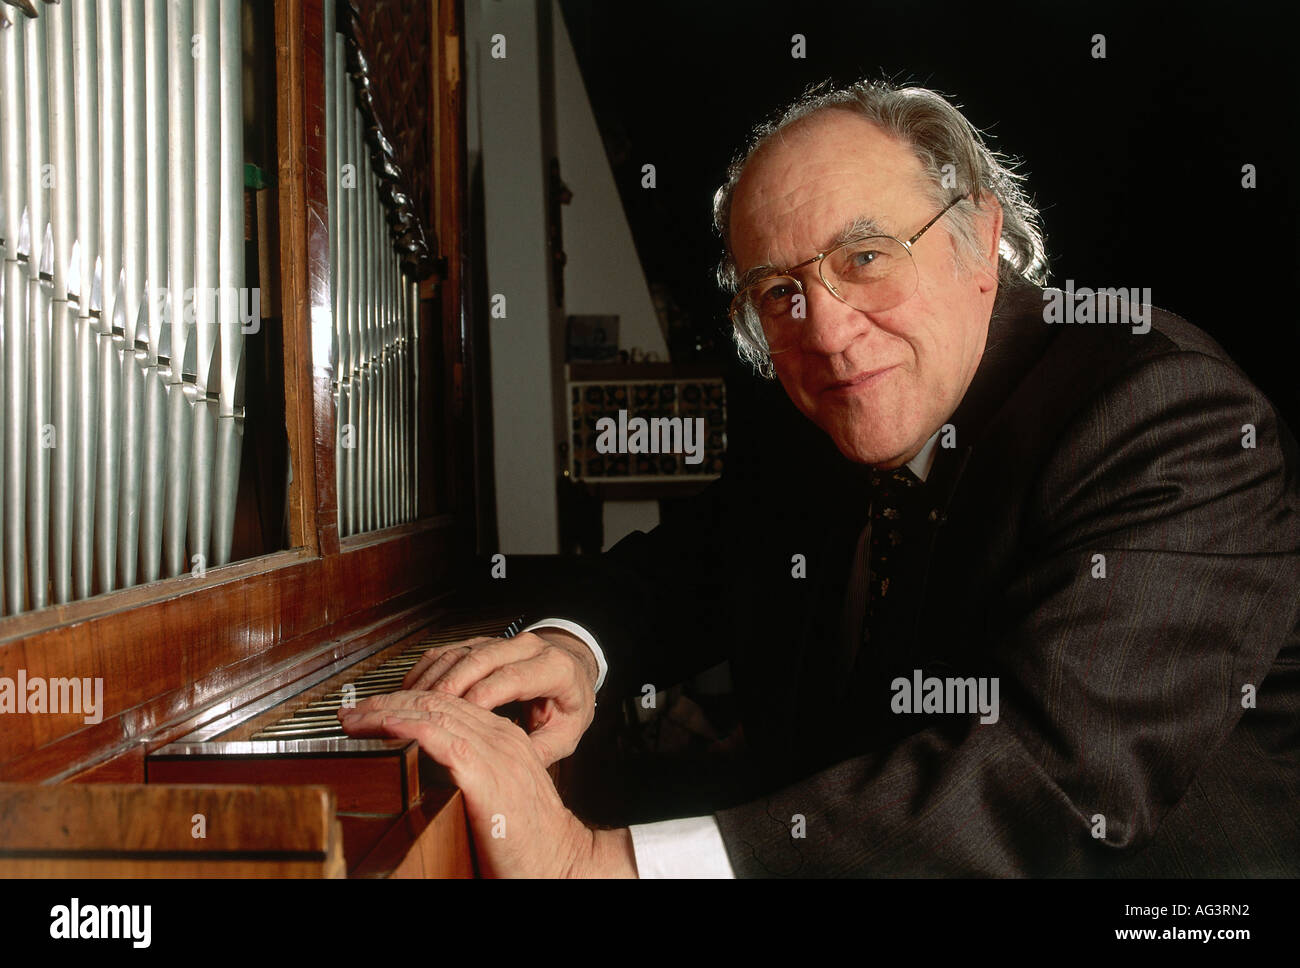 Everding, August, 31.10.1928 - 26.1.1999, German intendant, portrait, sitting in front of organ, 1995, Stock Photo